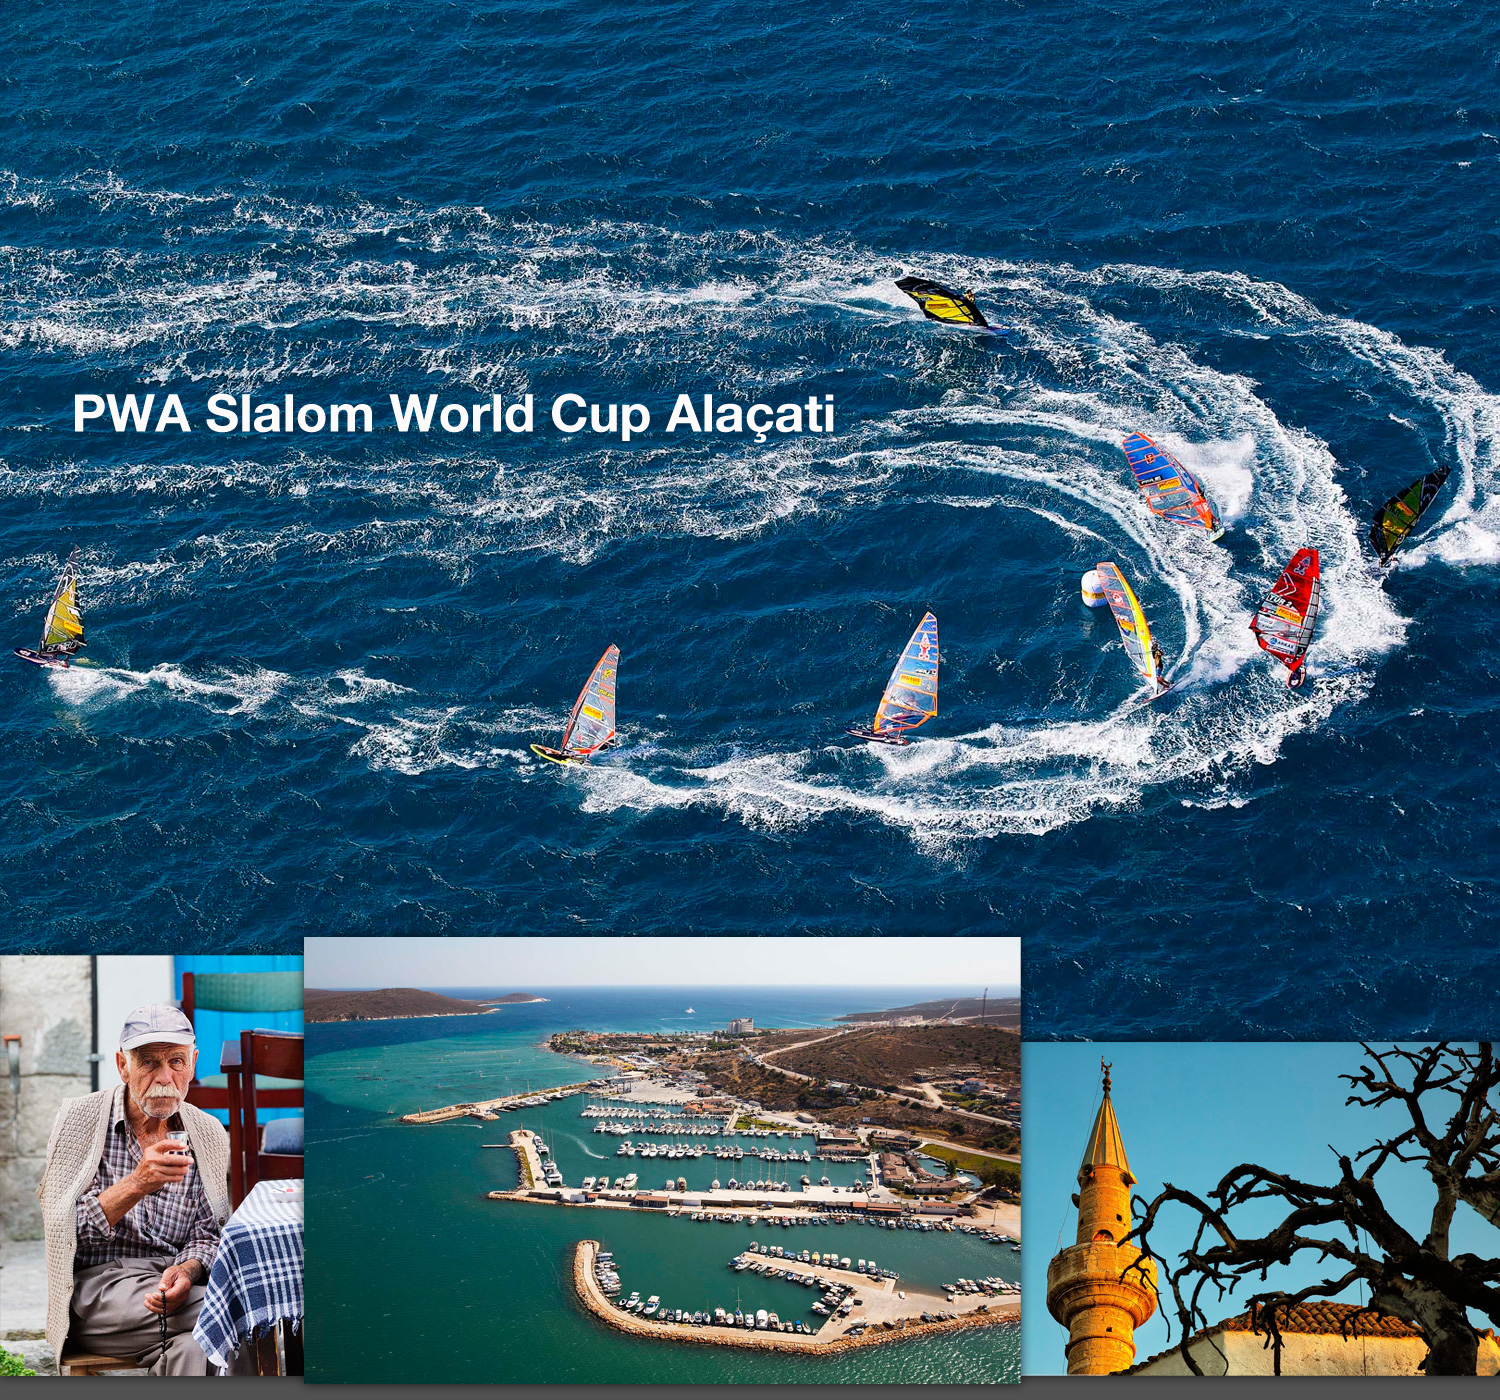 PWA Slalom World Cup Alacati 2014